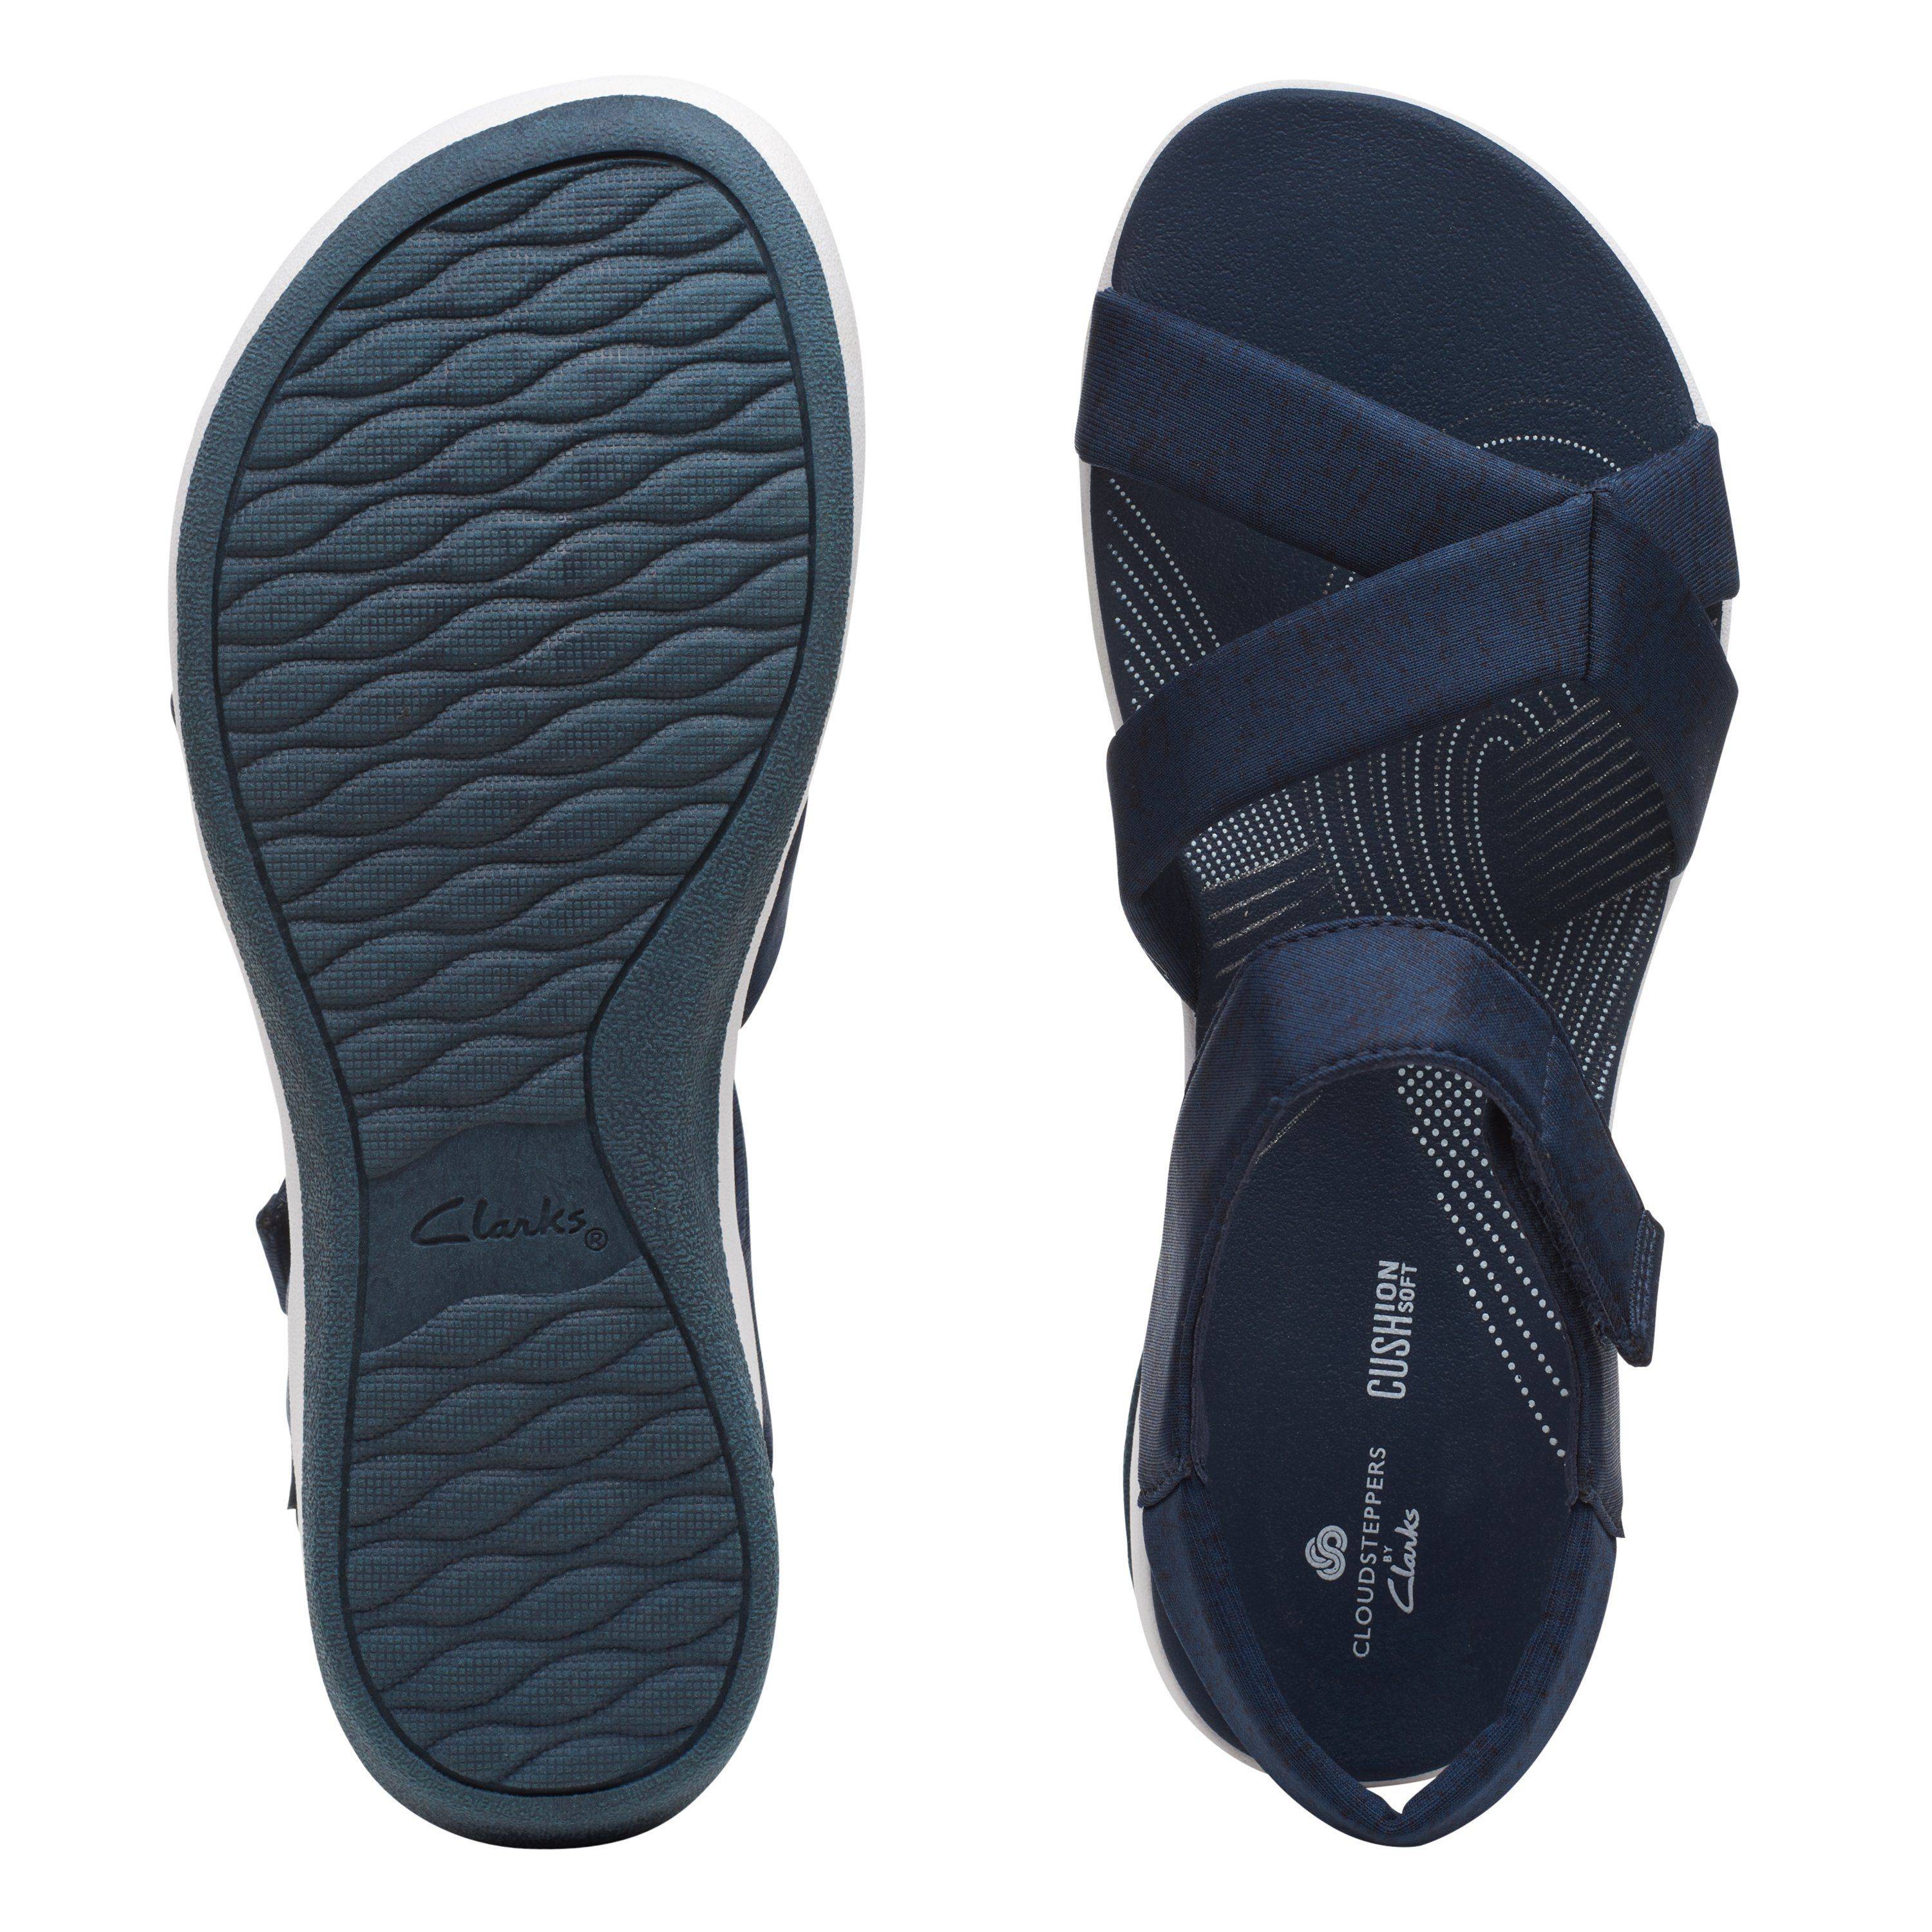 Женские сандалии Clarks, синие, цвет синий, размер 41 - фото 7